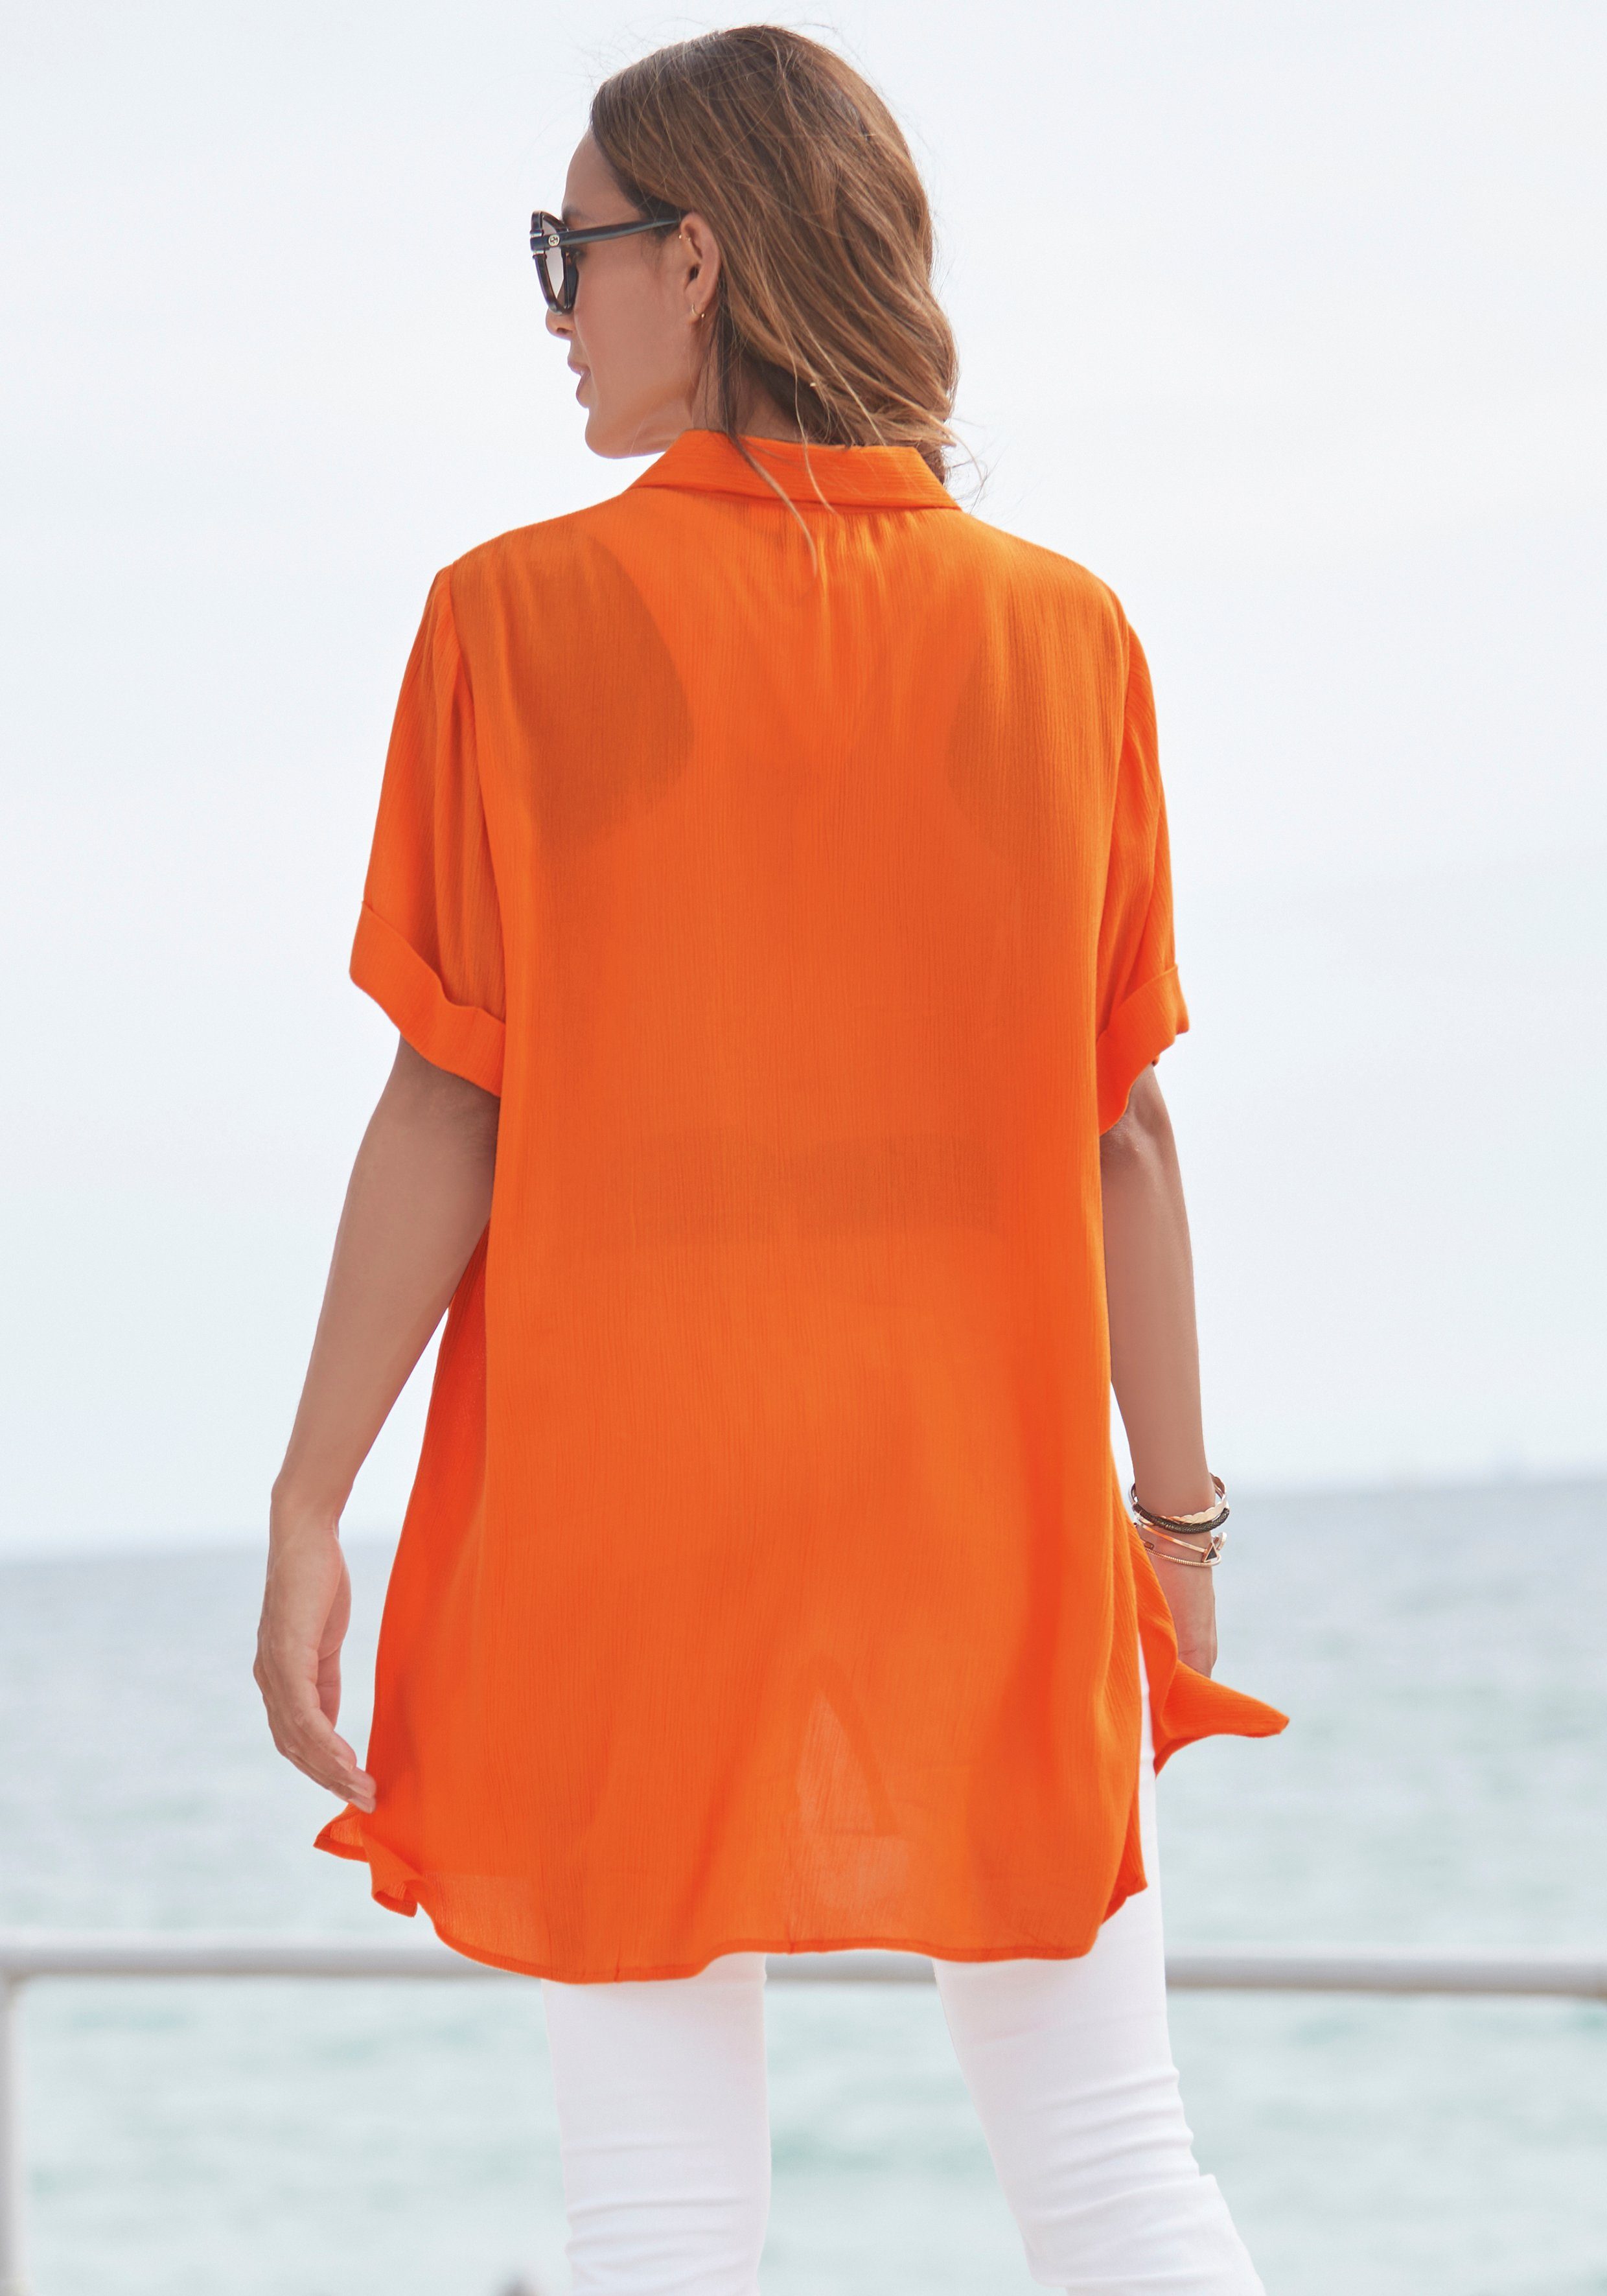 LASCANA Longbluse mit Knopfleiste, Kurzarmbluse, sommerlich Blusenkleid, orange